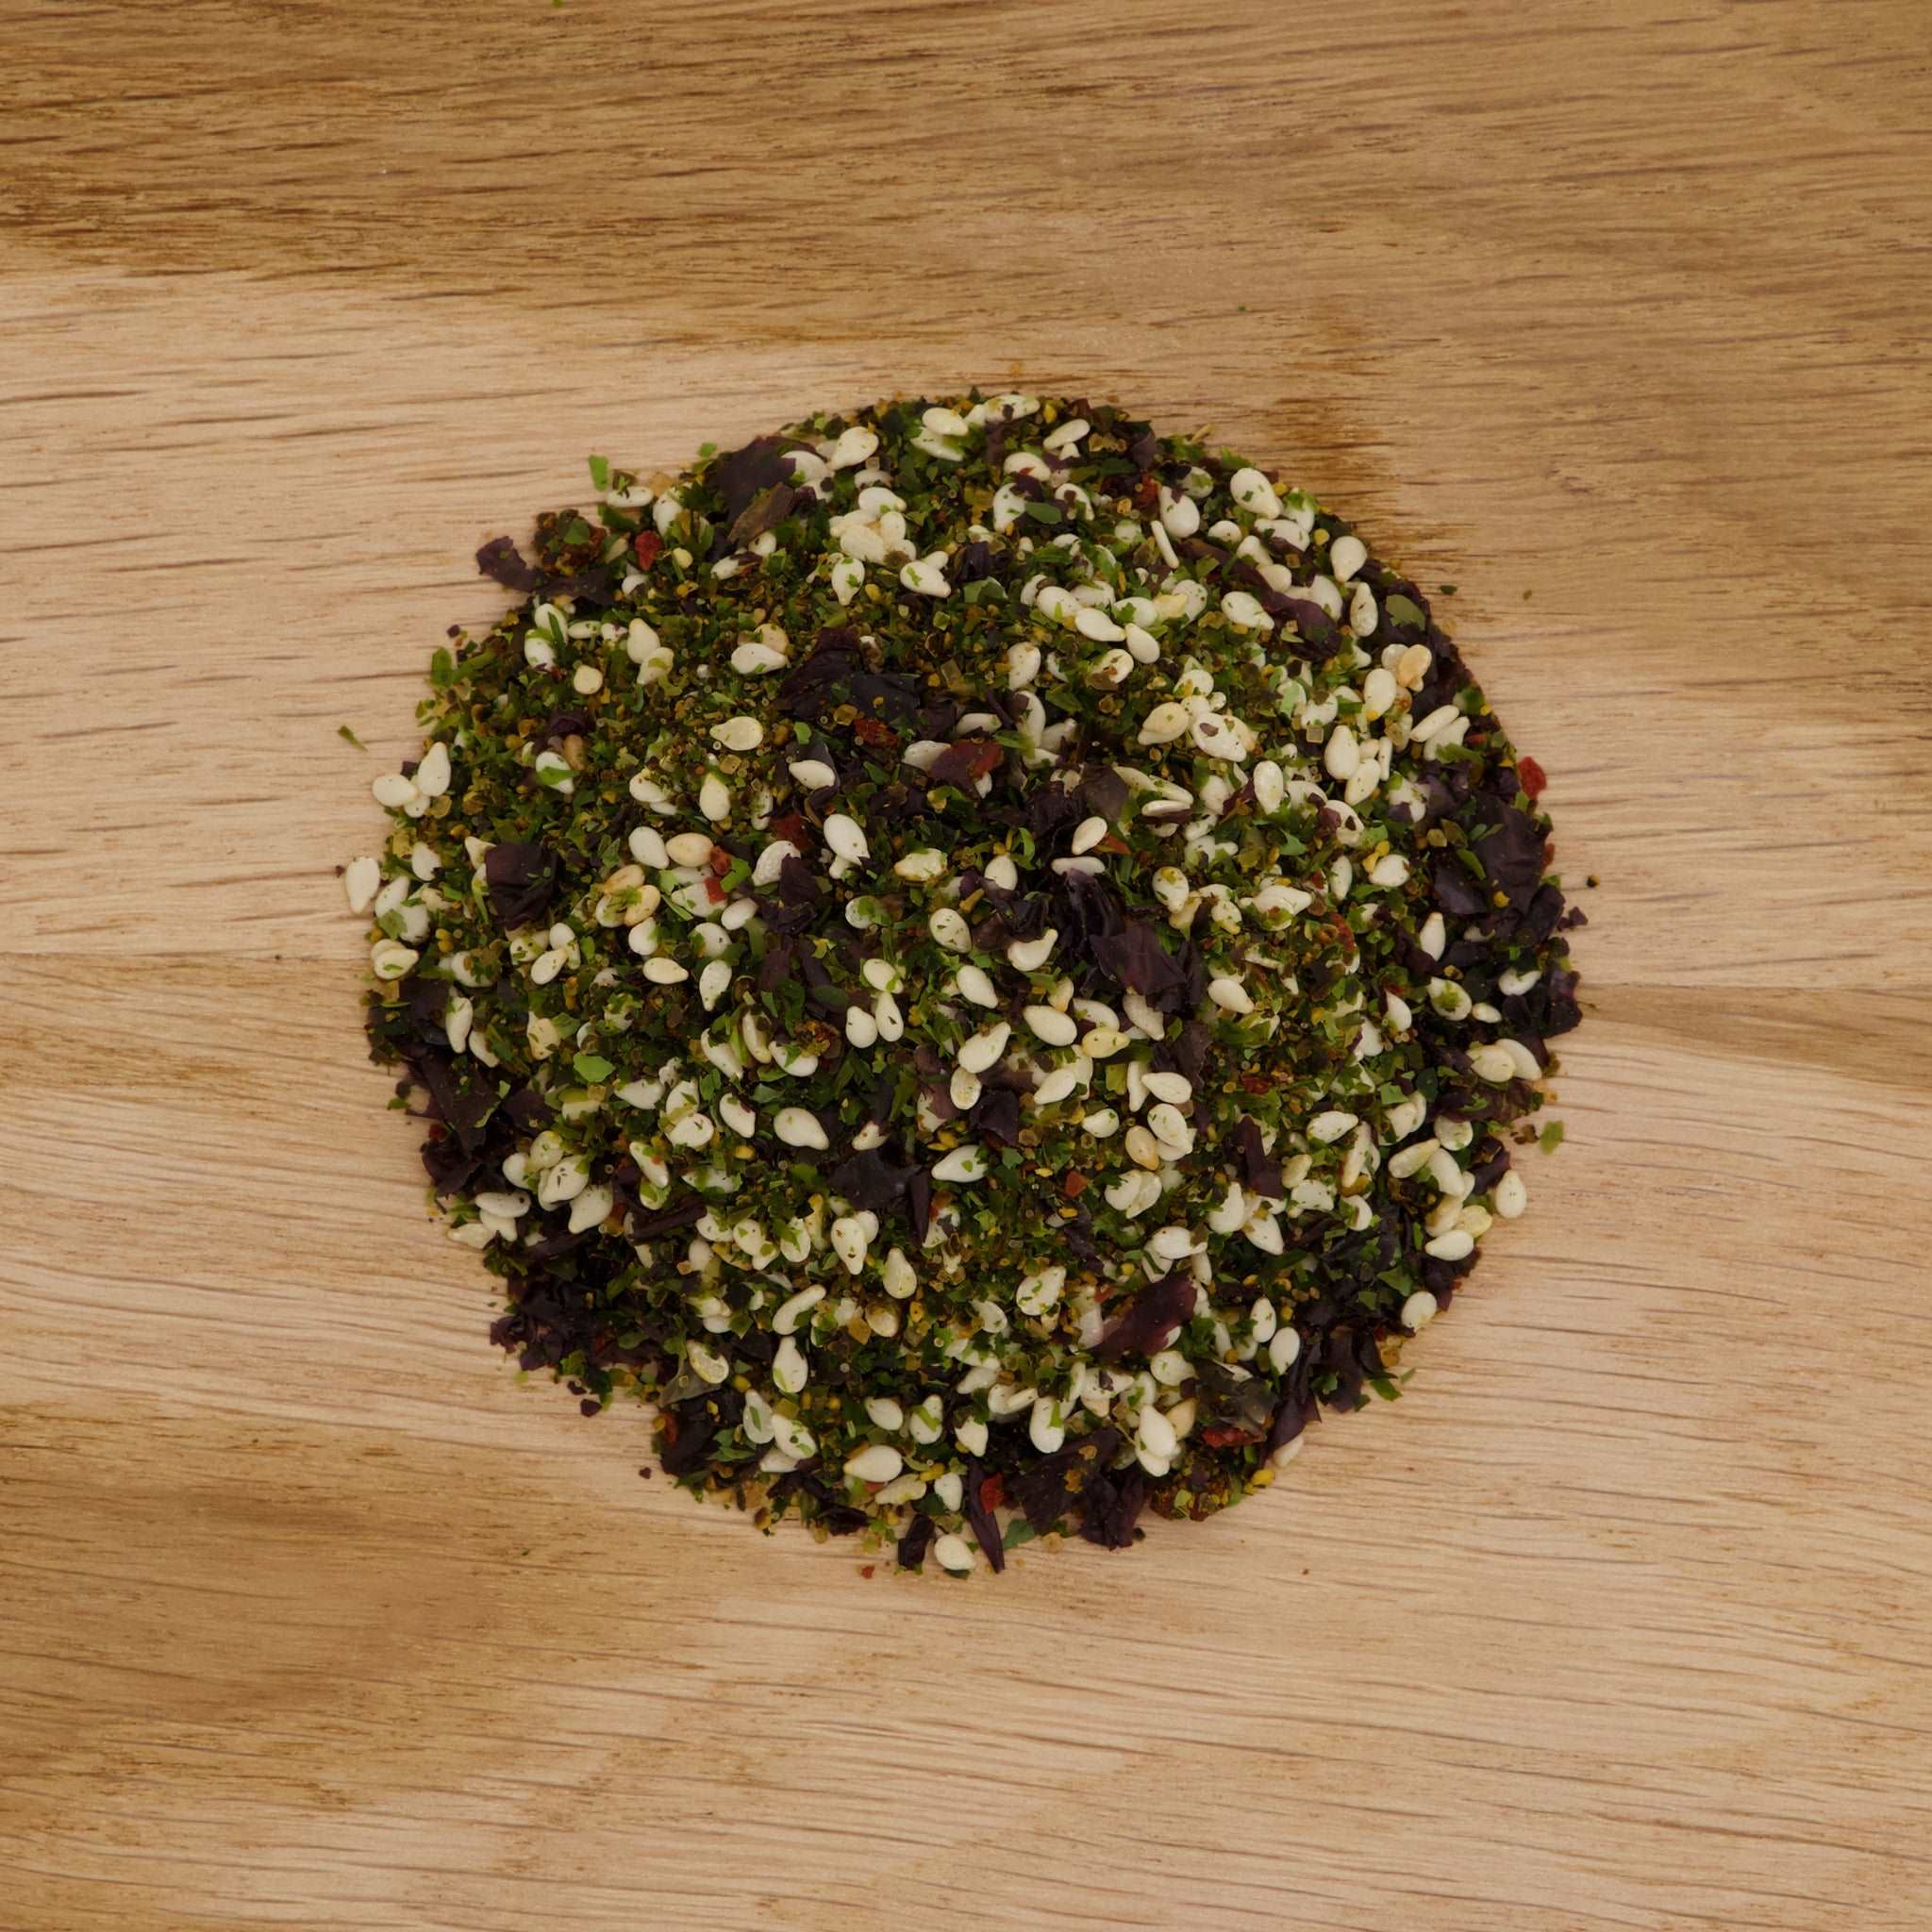 Furikake Seasonings (Seaweed & Sesame Blends, Gluten Free, Delicious, Vegan)